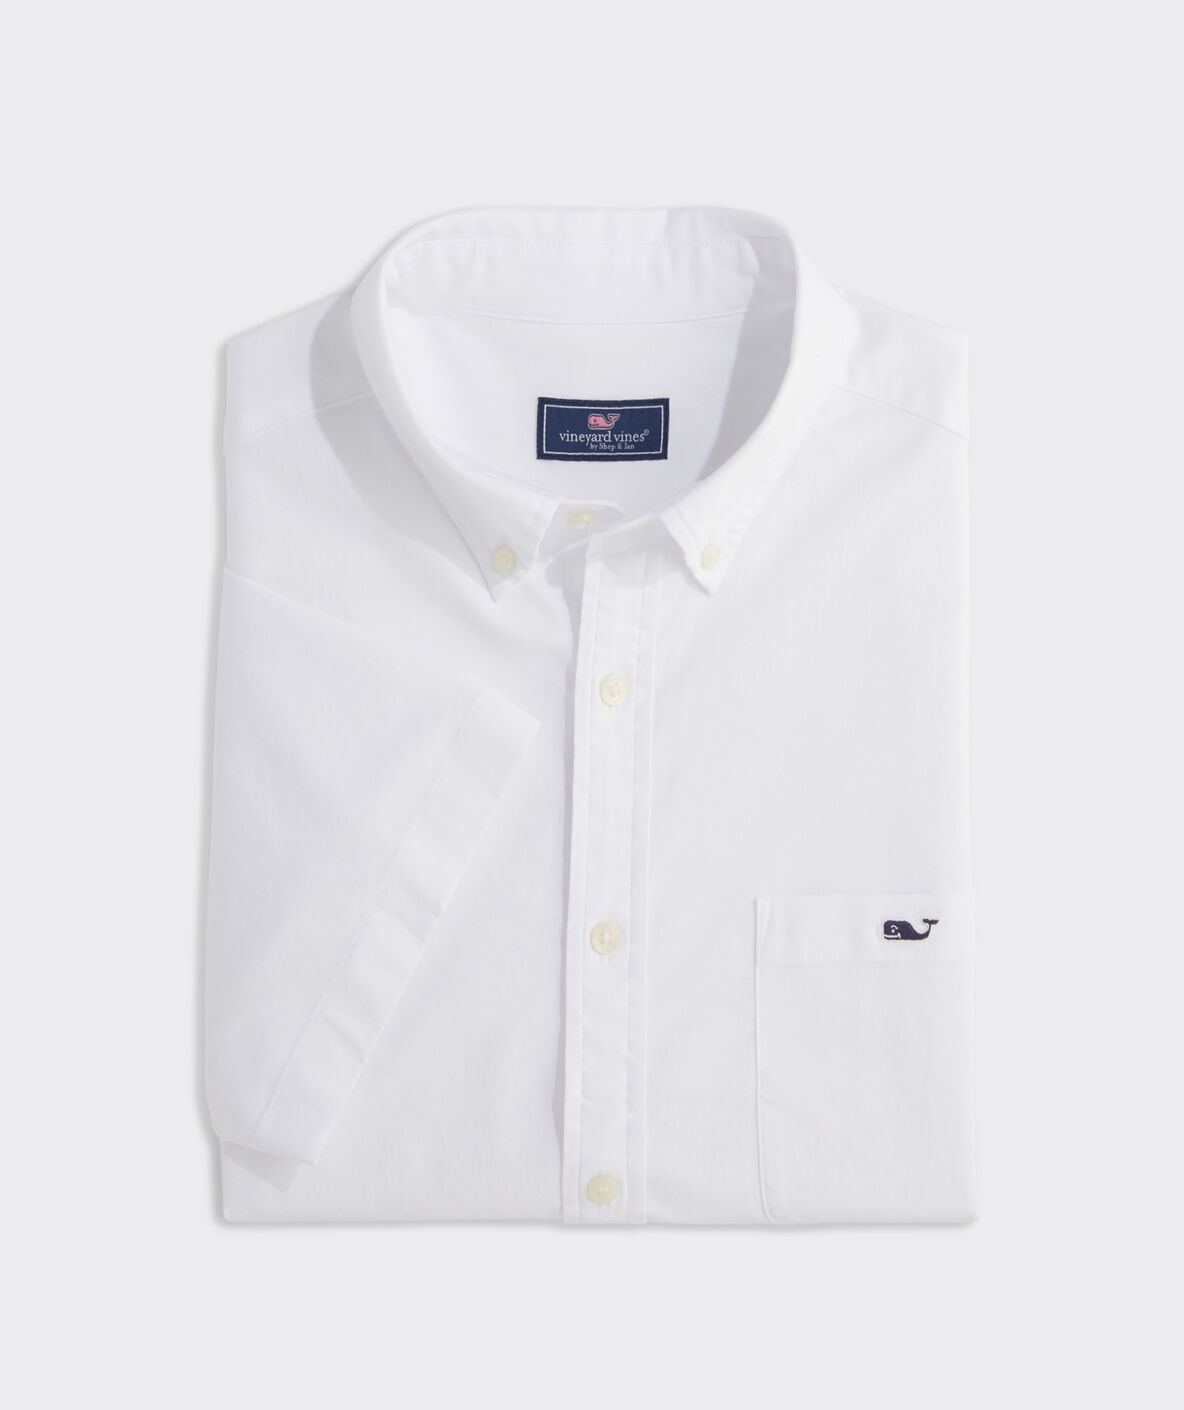 Shop Oxford Short-Sleeve Solid Shirt at vineyard vines